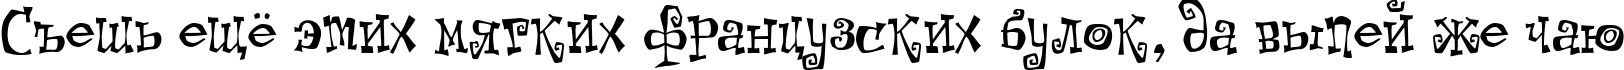 Пример написания шрифтом Kot Leopold текста на русском